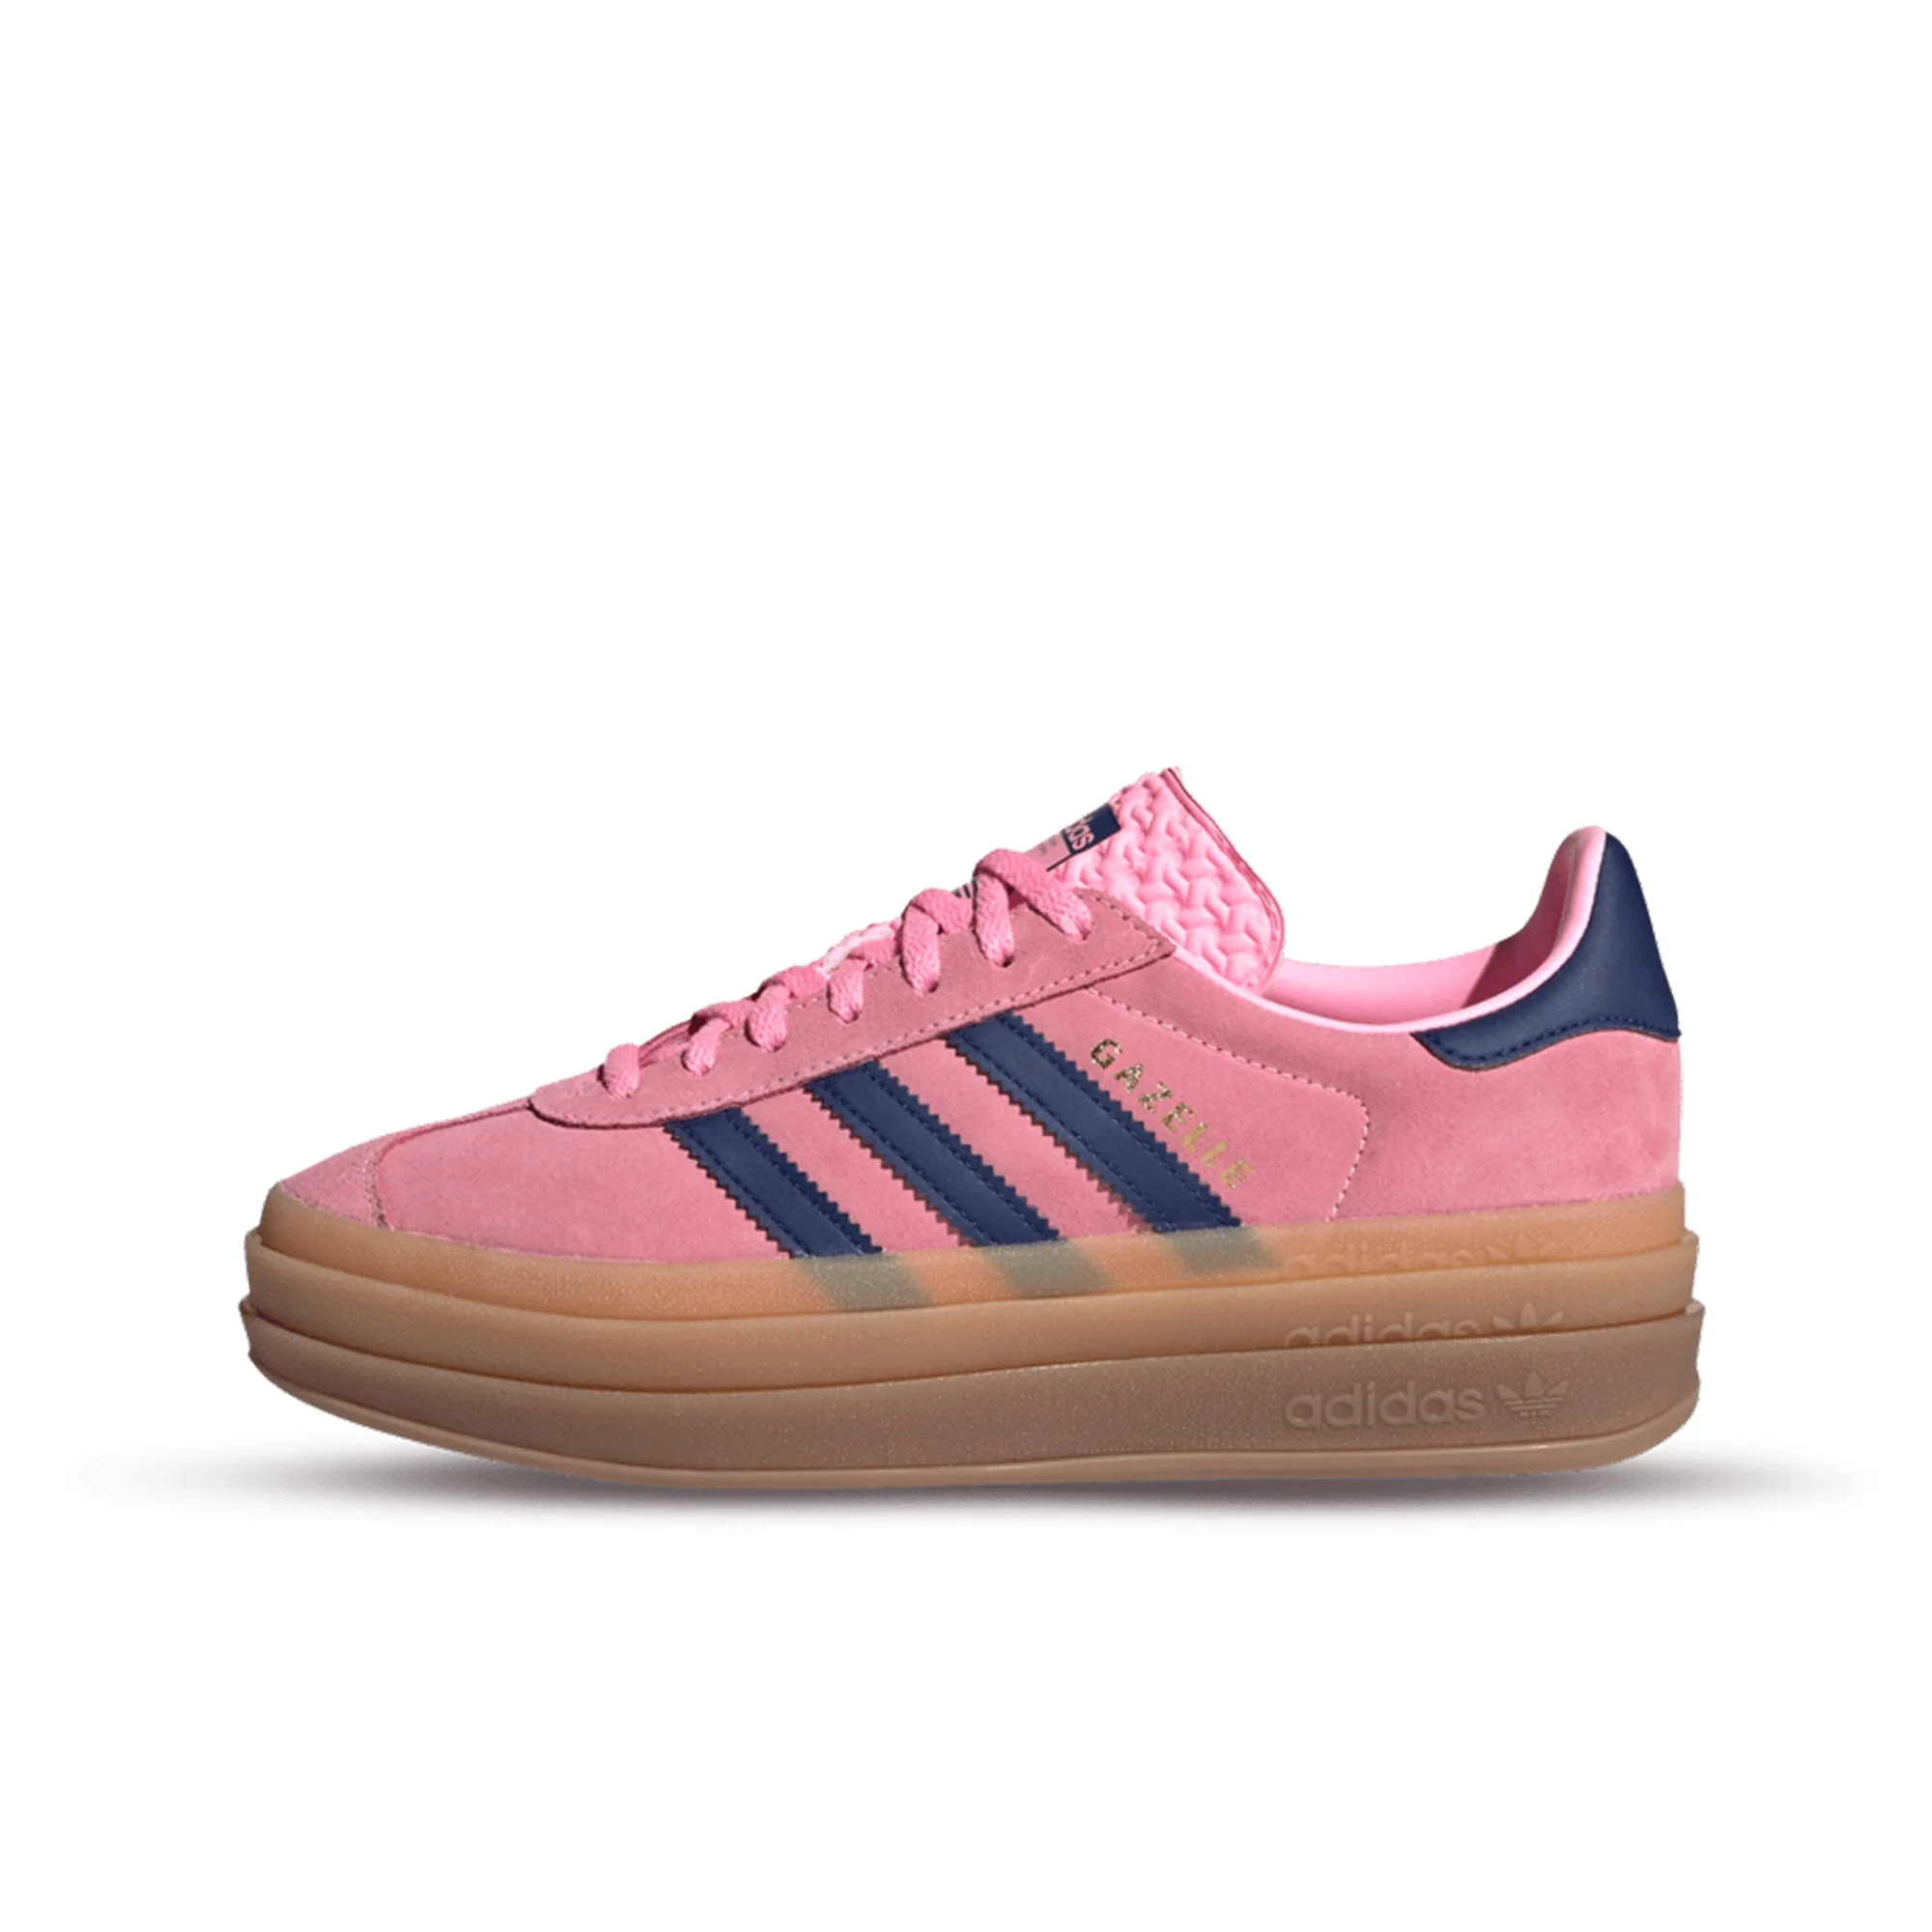 Afbeelding van Adidas Gazelle bold pink glow (w)